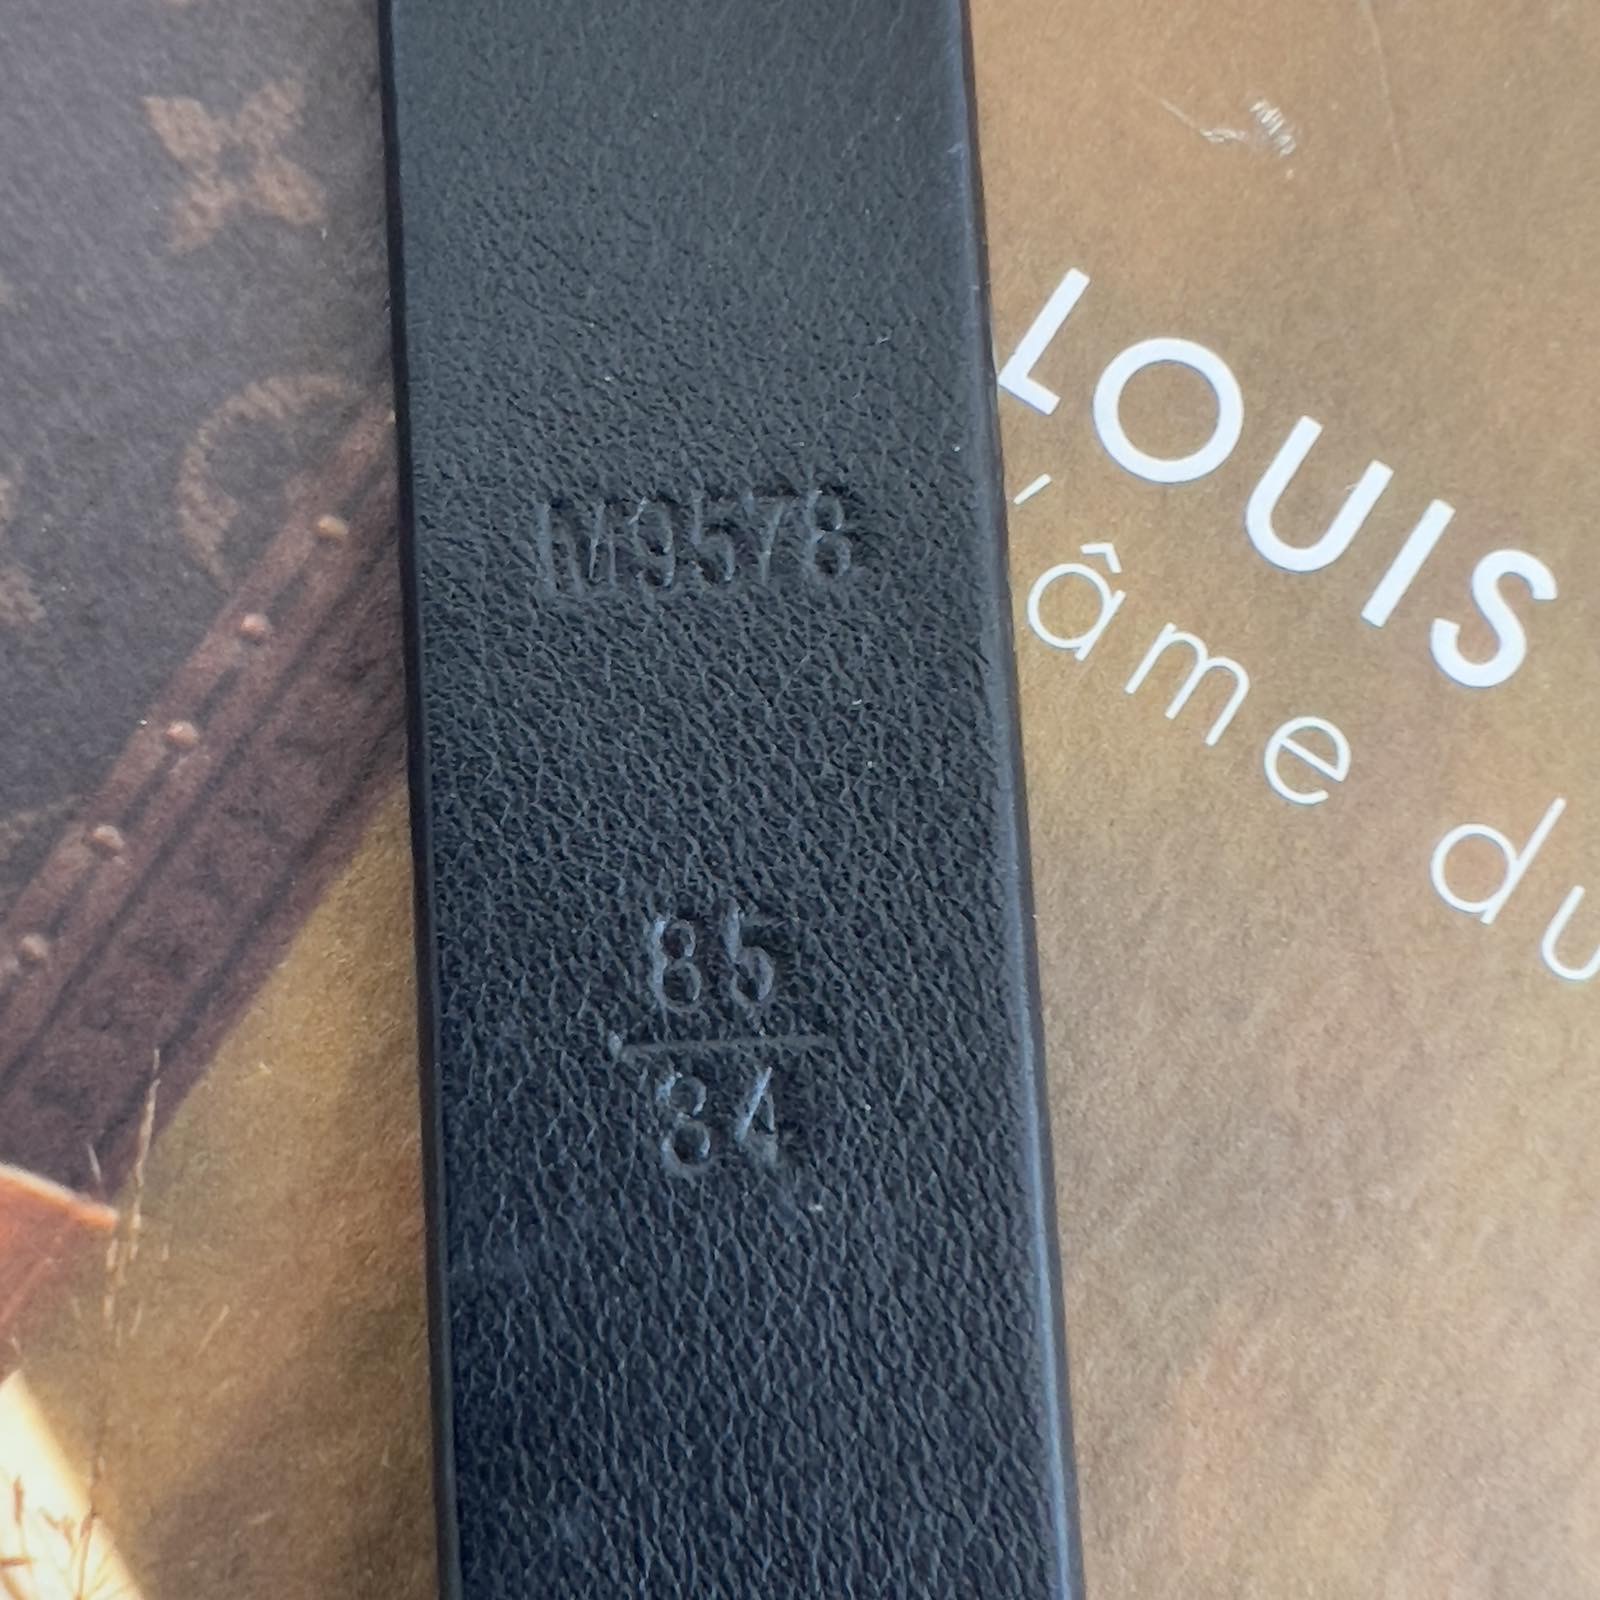 LOUIS VUITTON Black Leather Buckle Belt with Gold LV Logo Size 85 CM Length